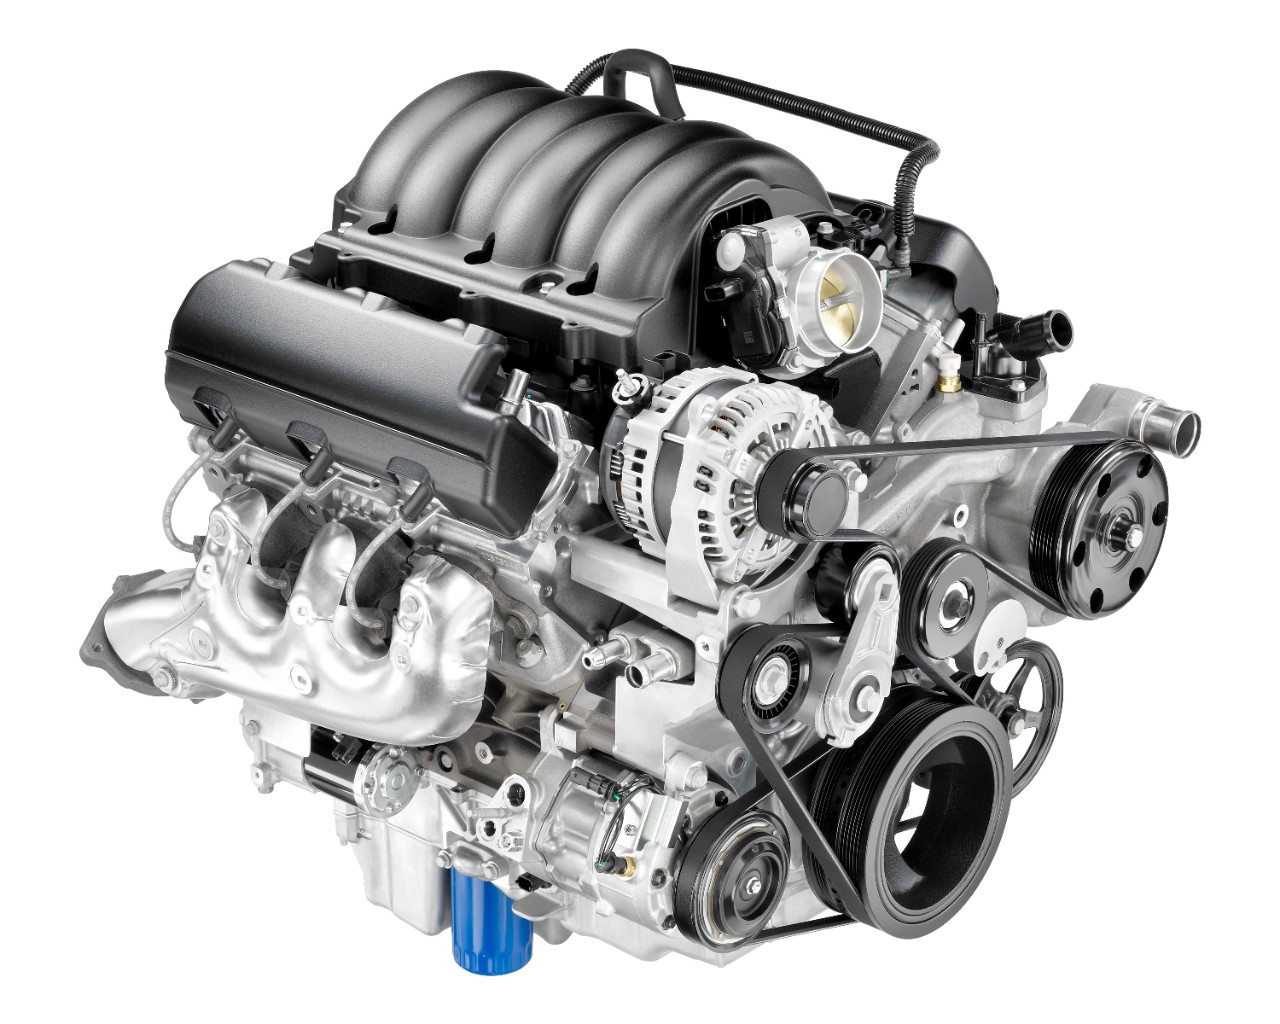 GM 4.3 Liter V6 EcoTec3 LV3 Engine Info, Power, Specs, Wiki | GM Authority